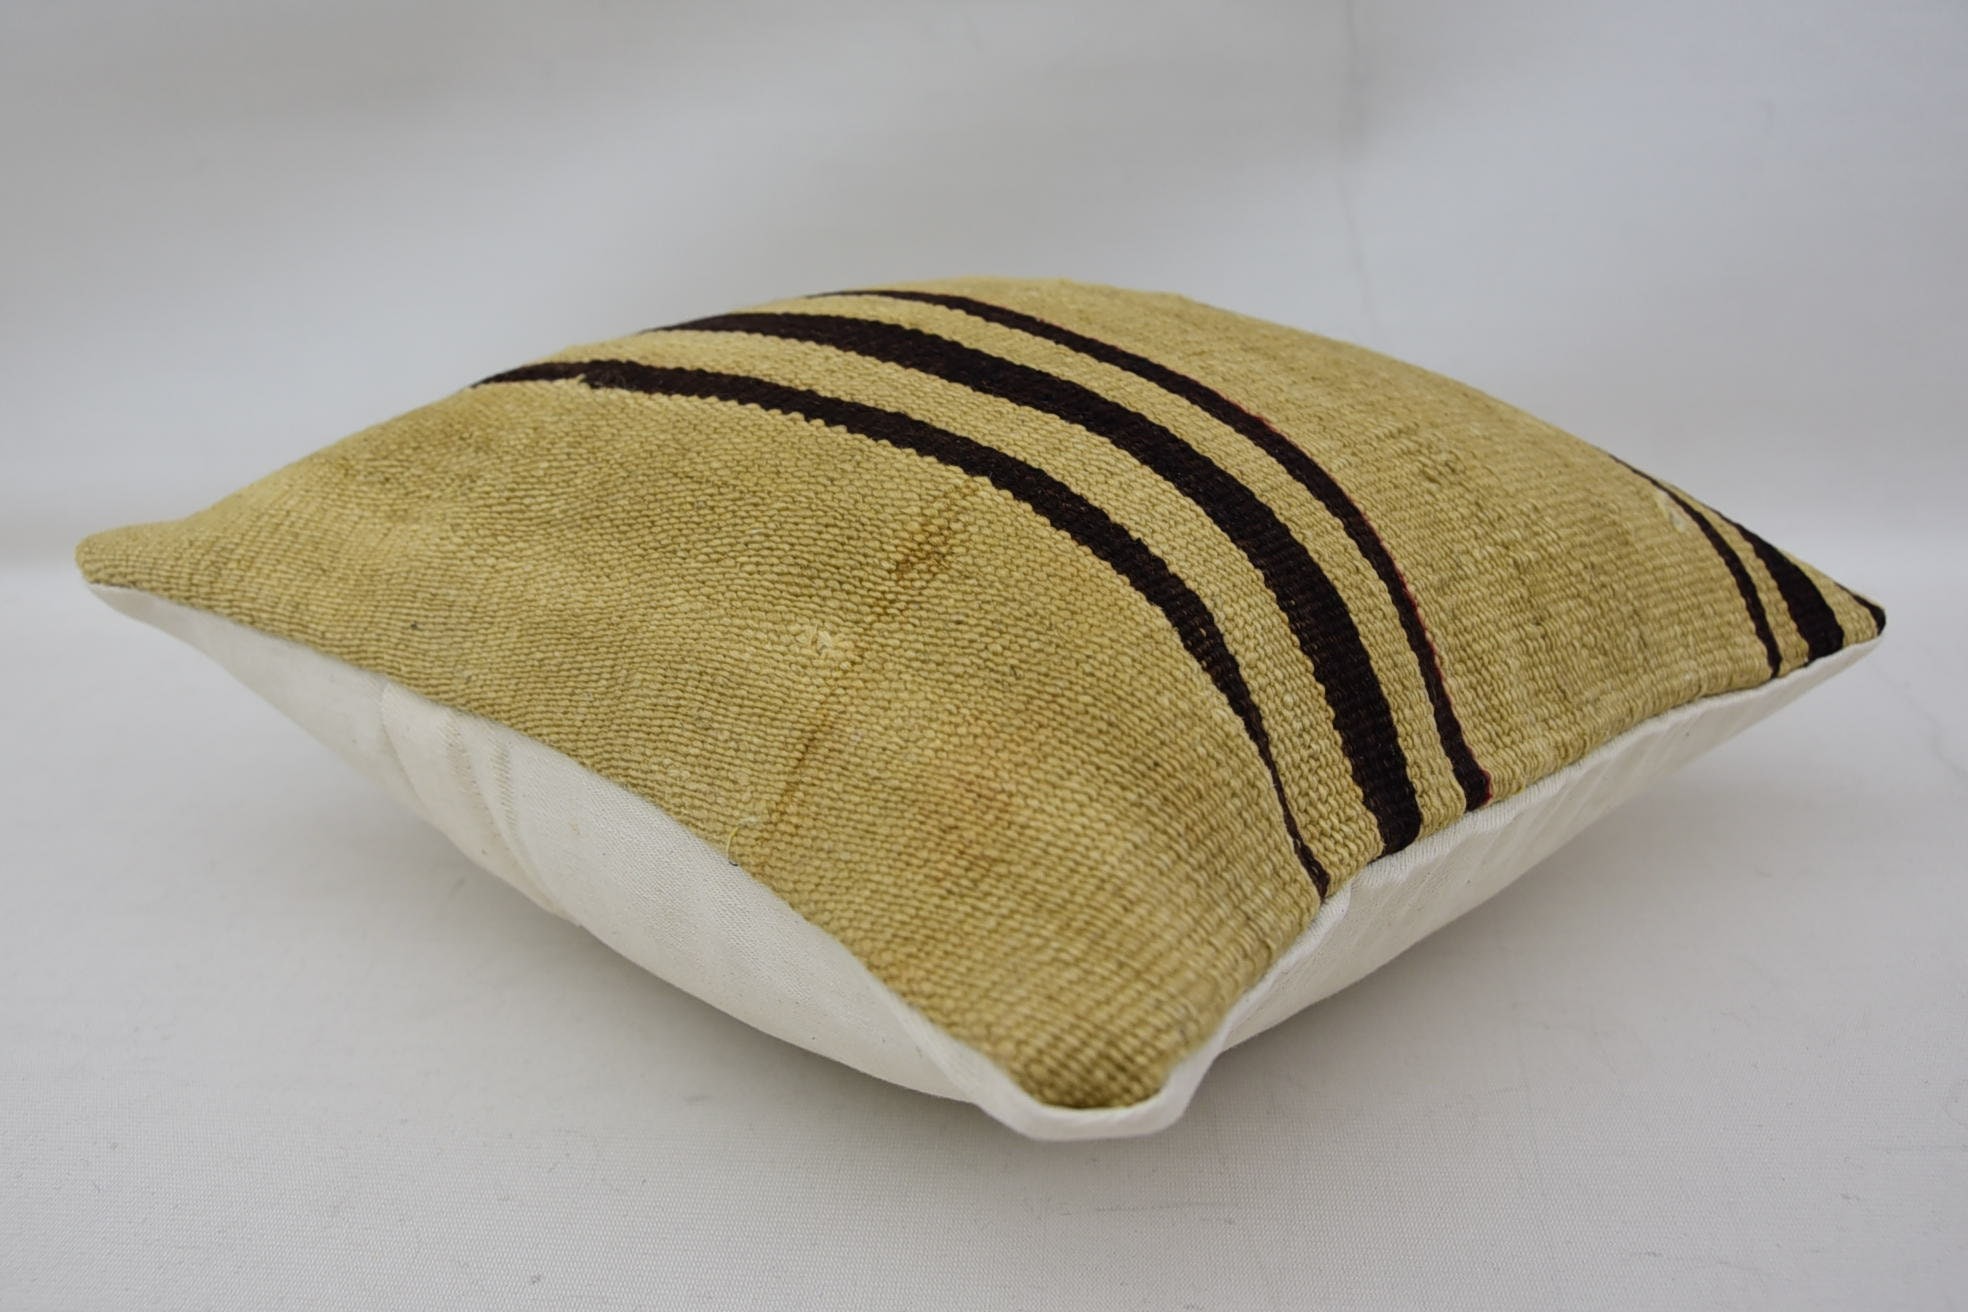 Vintage Pillow, 14"x14" Beige Pillow Case, Nomadic Cushion Case, Vintage Kilim Pillow, Ethnic Throw Pillow Case, Kilim Pillow Cover